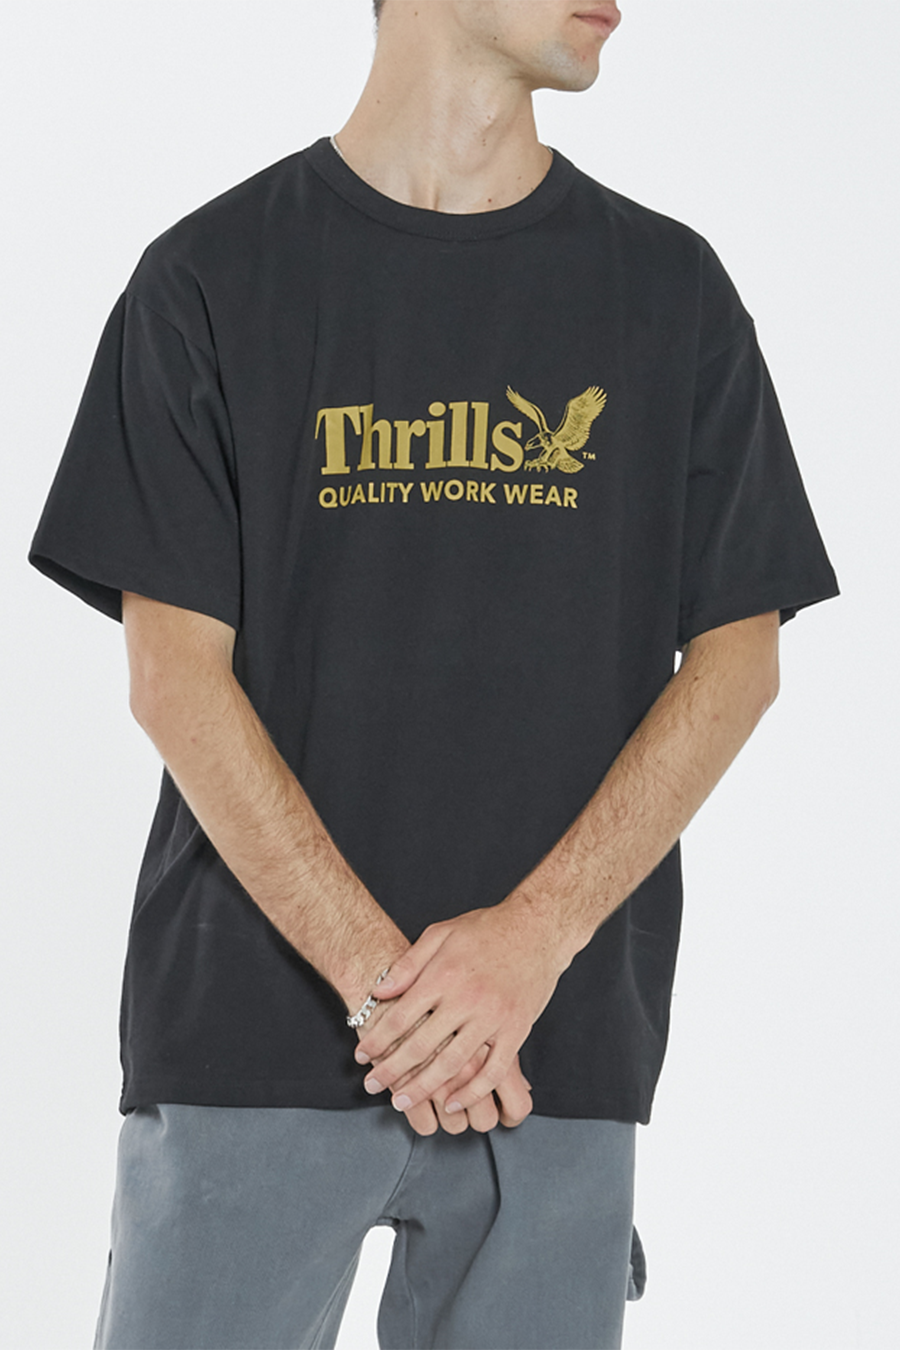 Thrills Workwear Box Tee | Black - Main Image Number 1 of 2